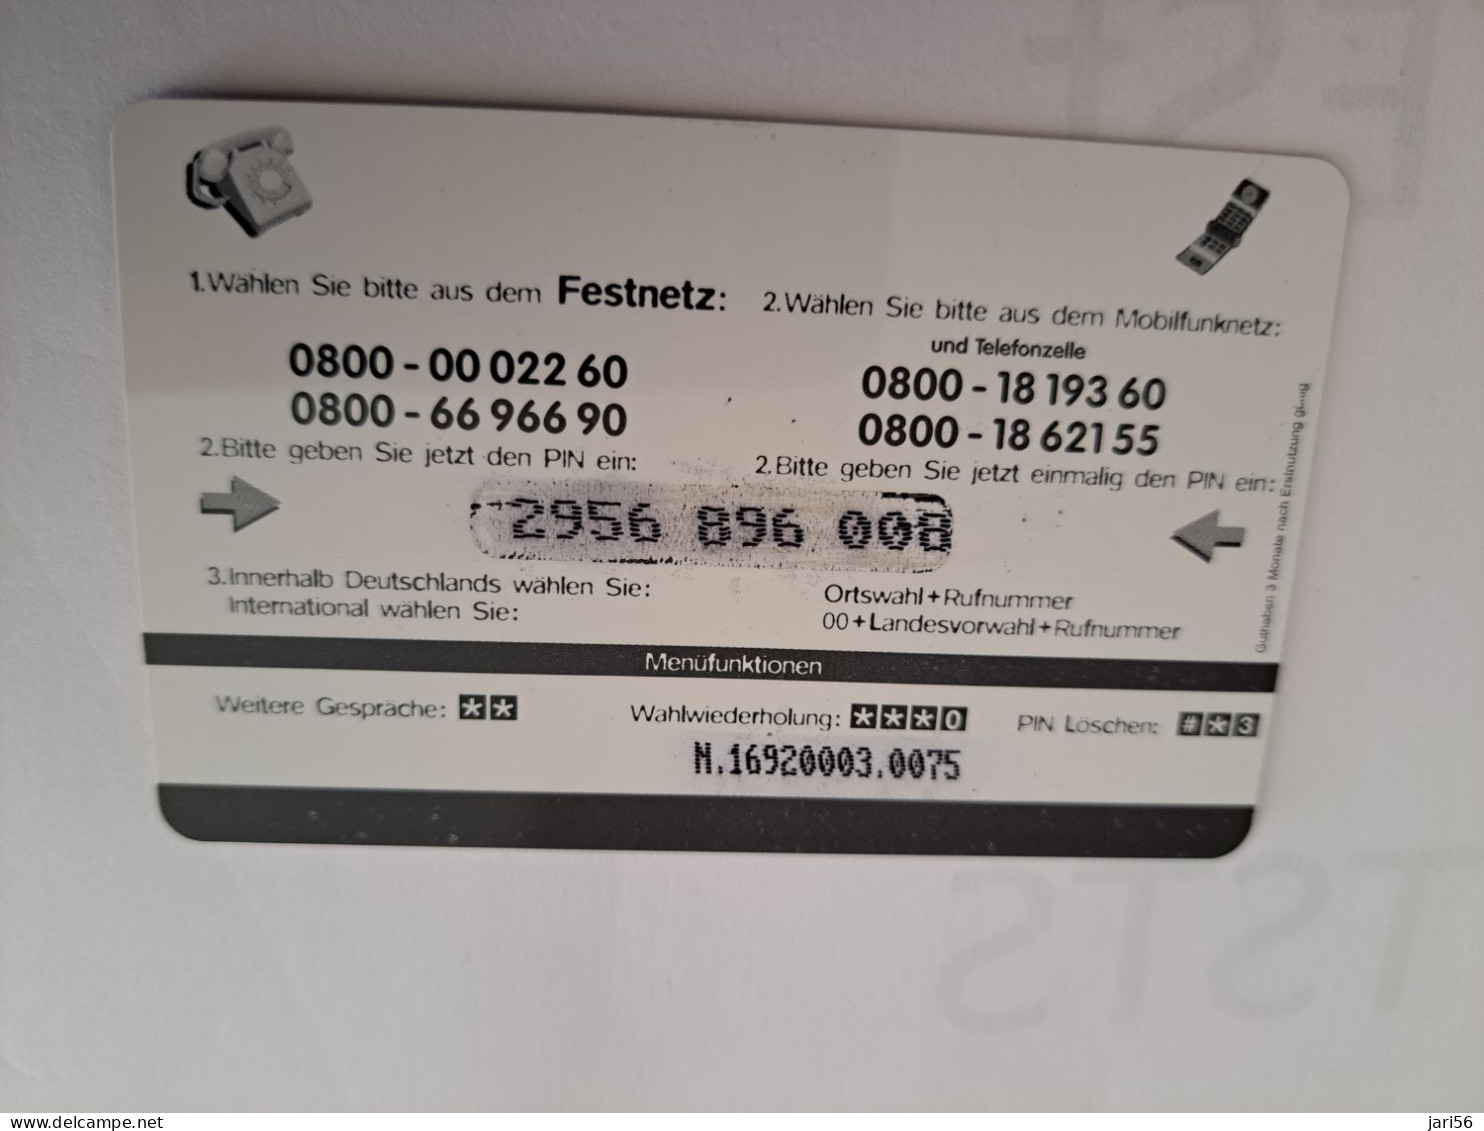 DUITSLAND/GERMANY  € 6,- / PLANET/ PIGEON BIRD   ON CARD        Fine Used  PREPAID  **16531** - Cellulari, Carte Prepagate E Ricariche